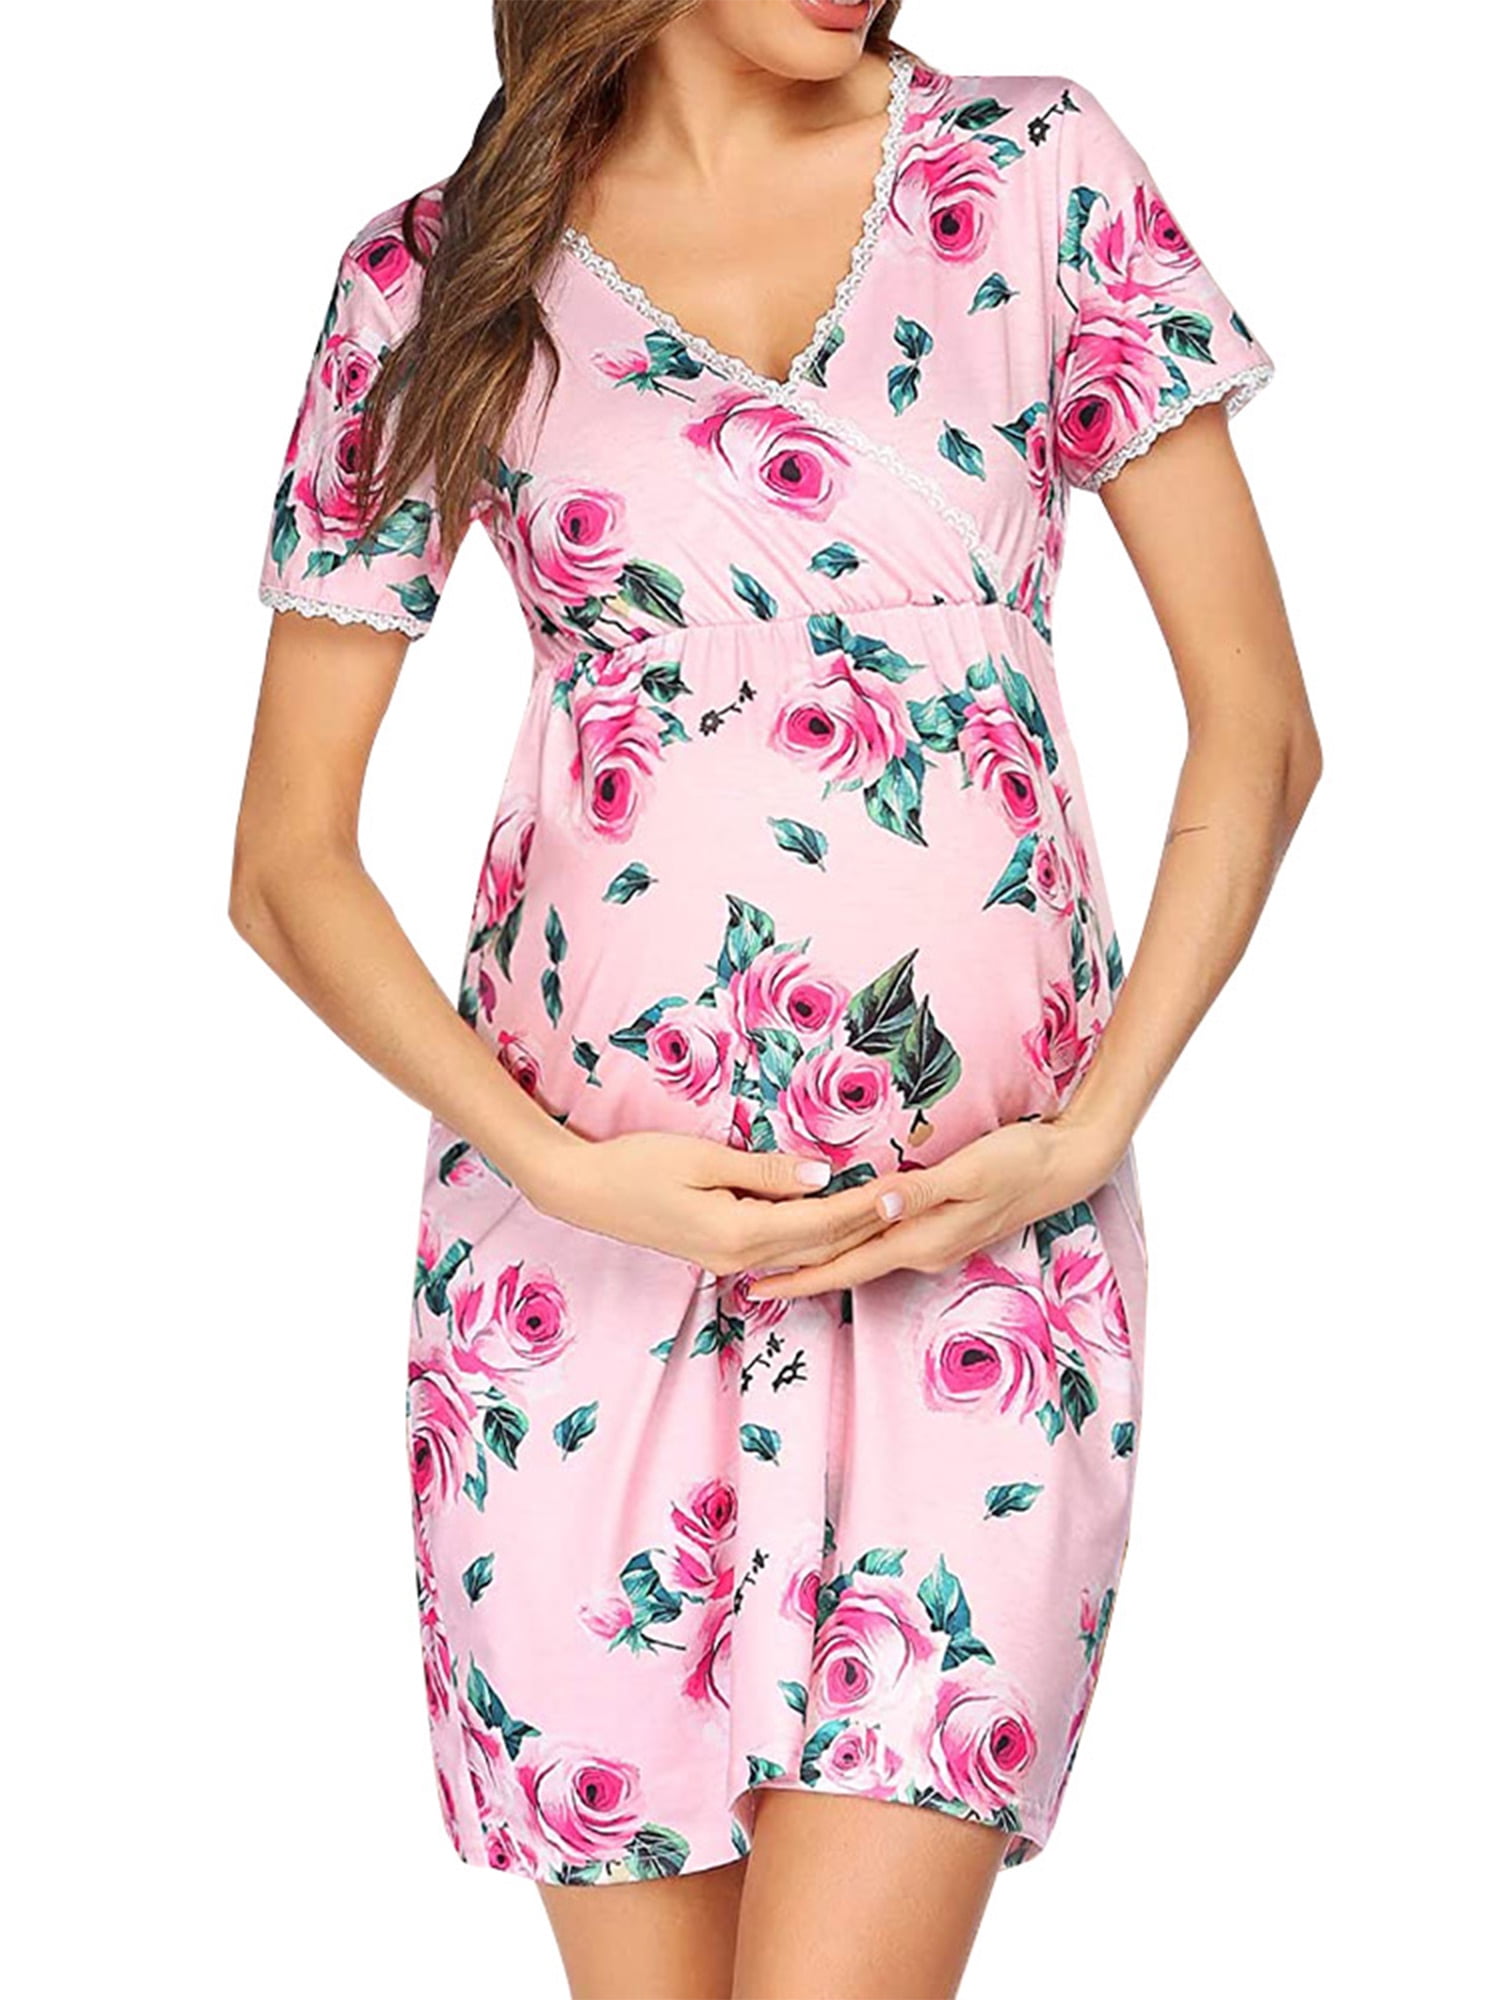 Black Maternity Nursing Pajama Two Piece Dress Nightgown Long Sleeve S M L XL 